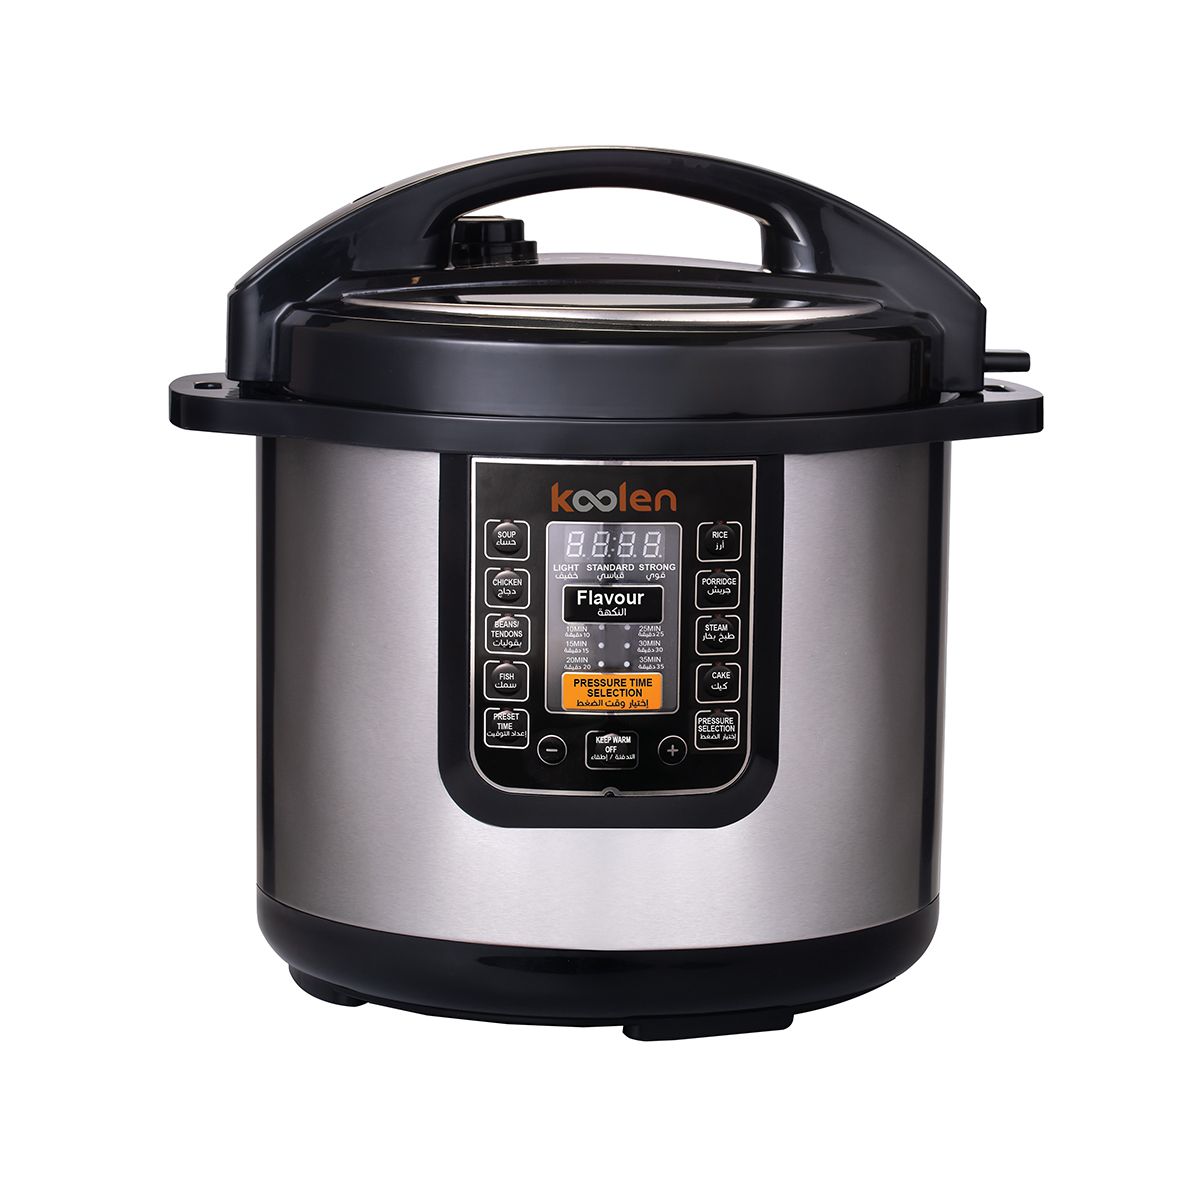 Koolen Pressure Cooker 10 Liter, 1600W, Memory Function, 12 Functions, Steel - 816106004